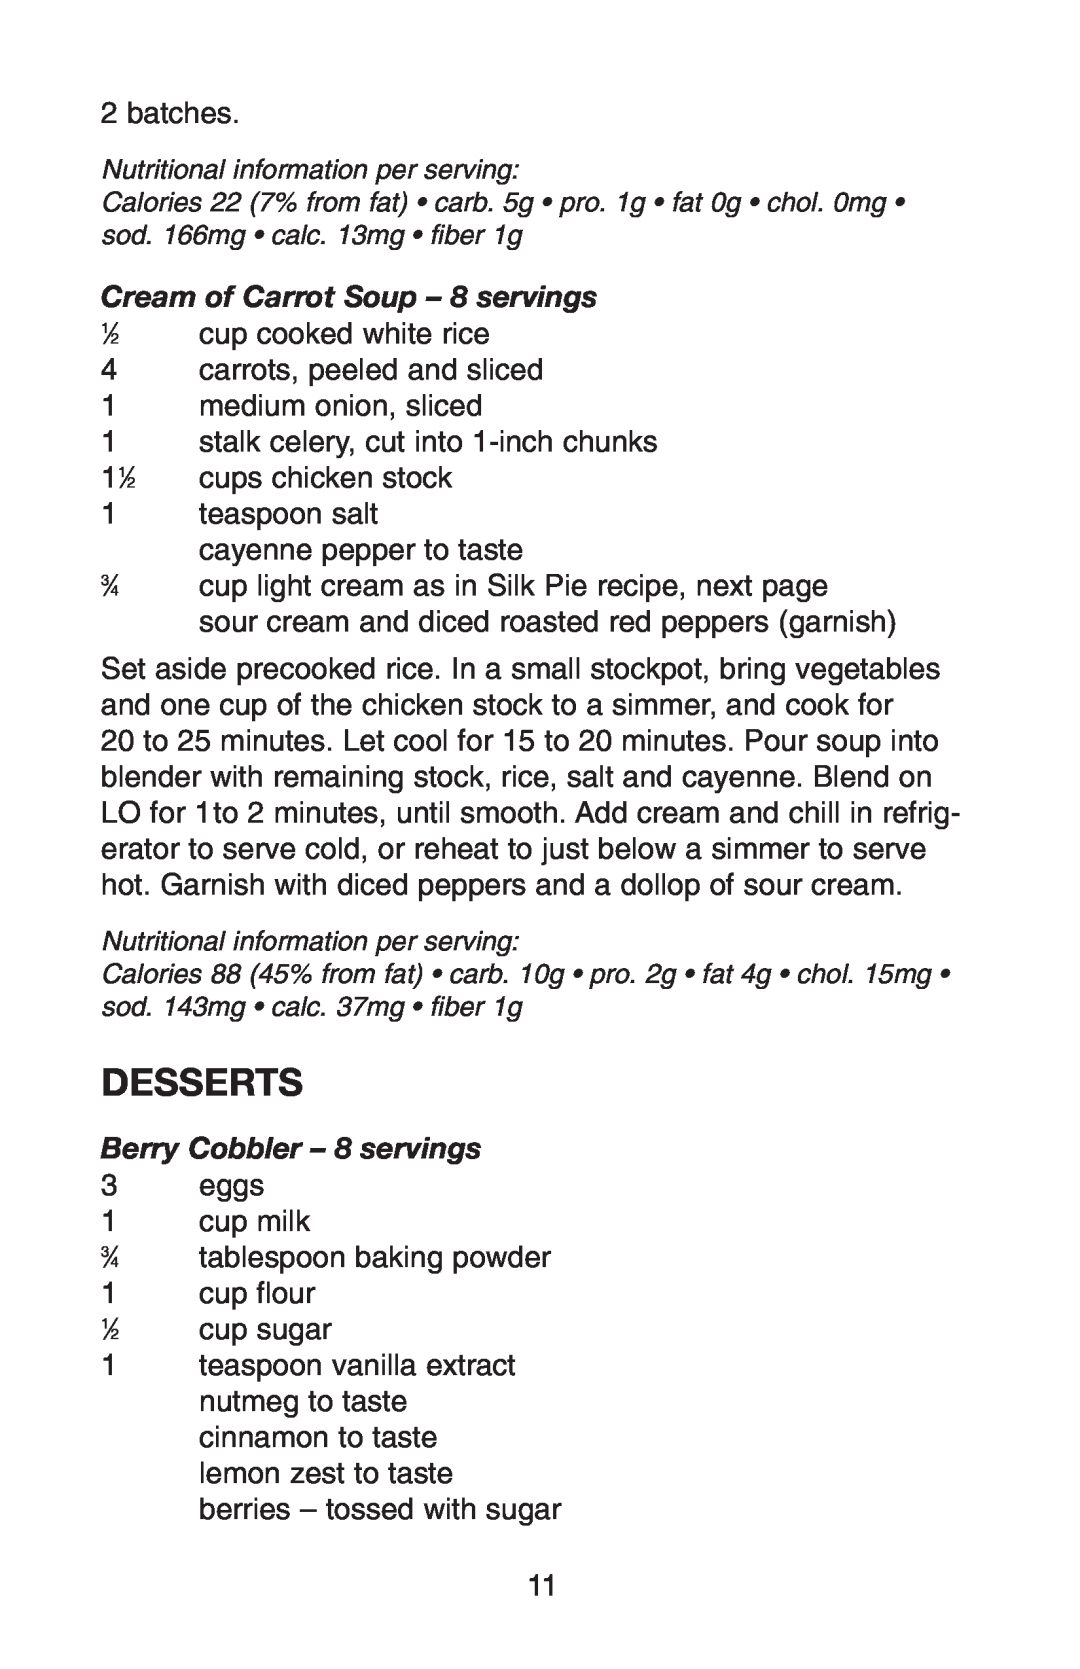 Conair RB70 manual Desserts, Cream of Carrot Soup - 8 servings, Berry Cobbler - 8 servings 